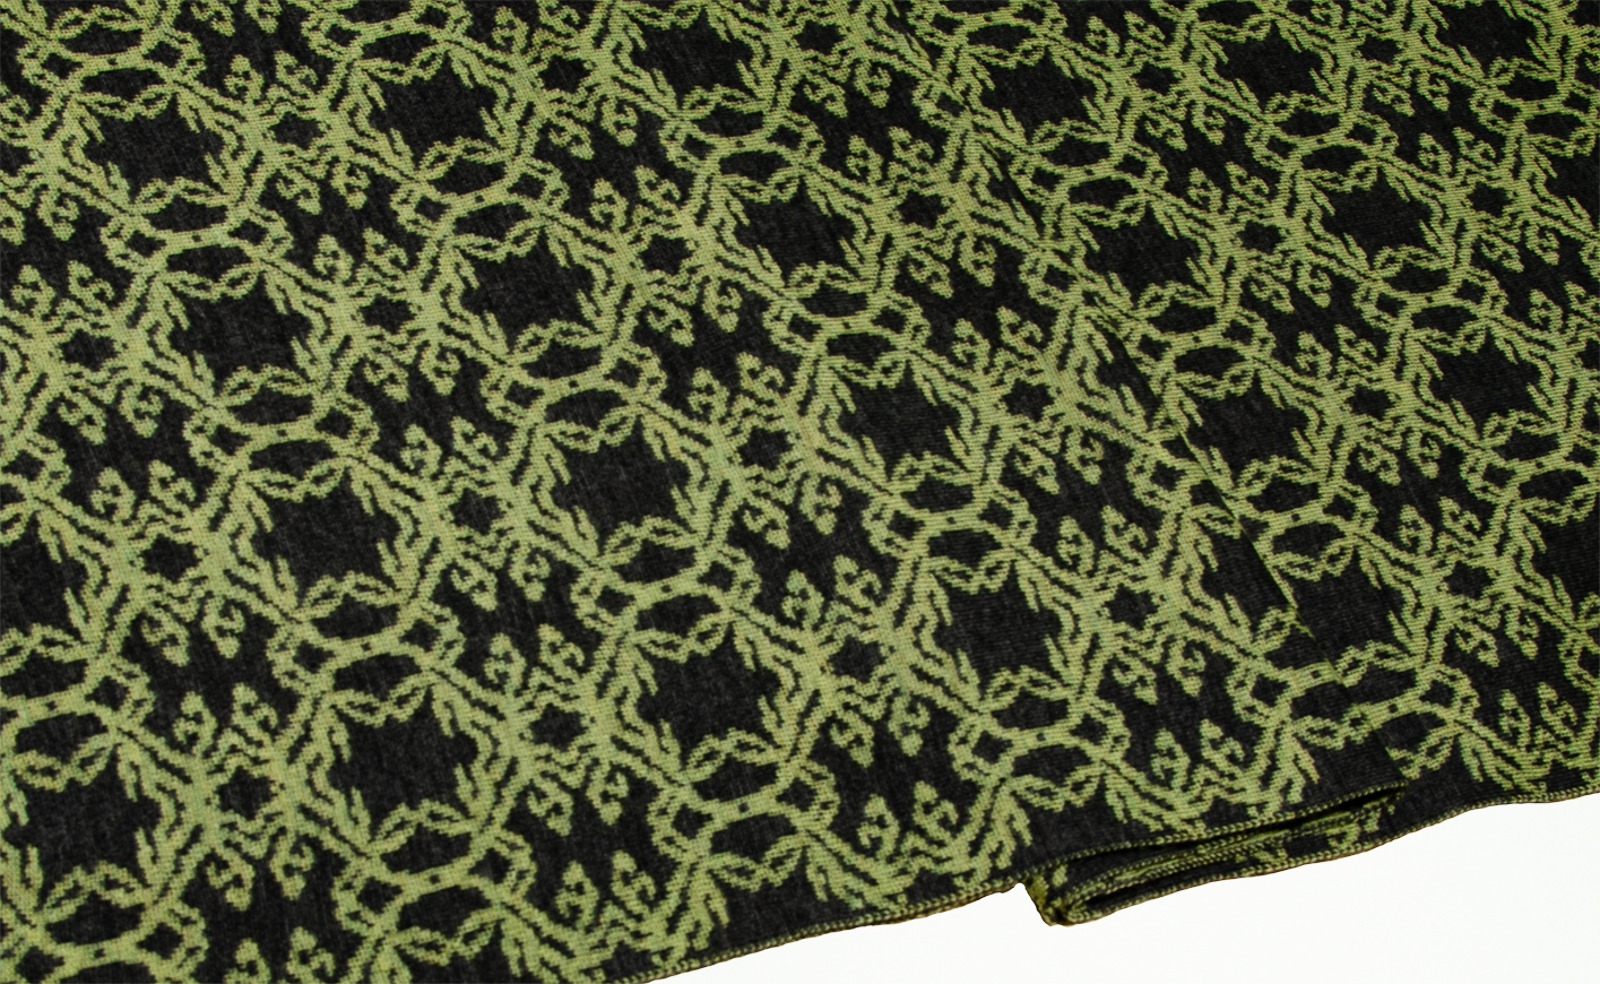 Merino scarf wreath in dark gray and light green